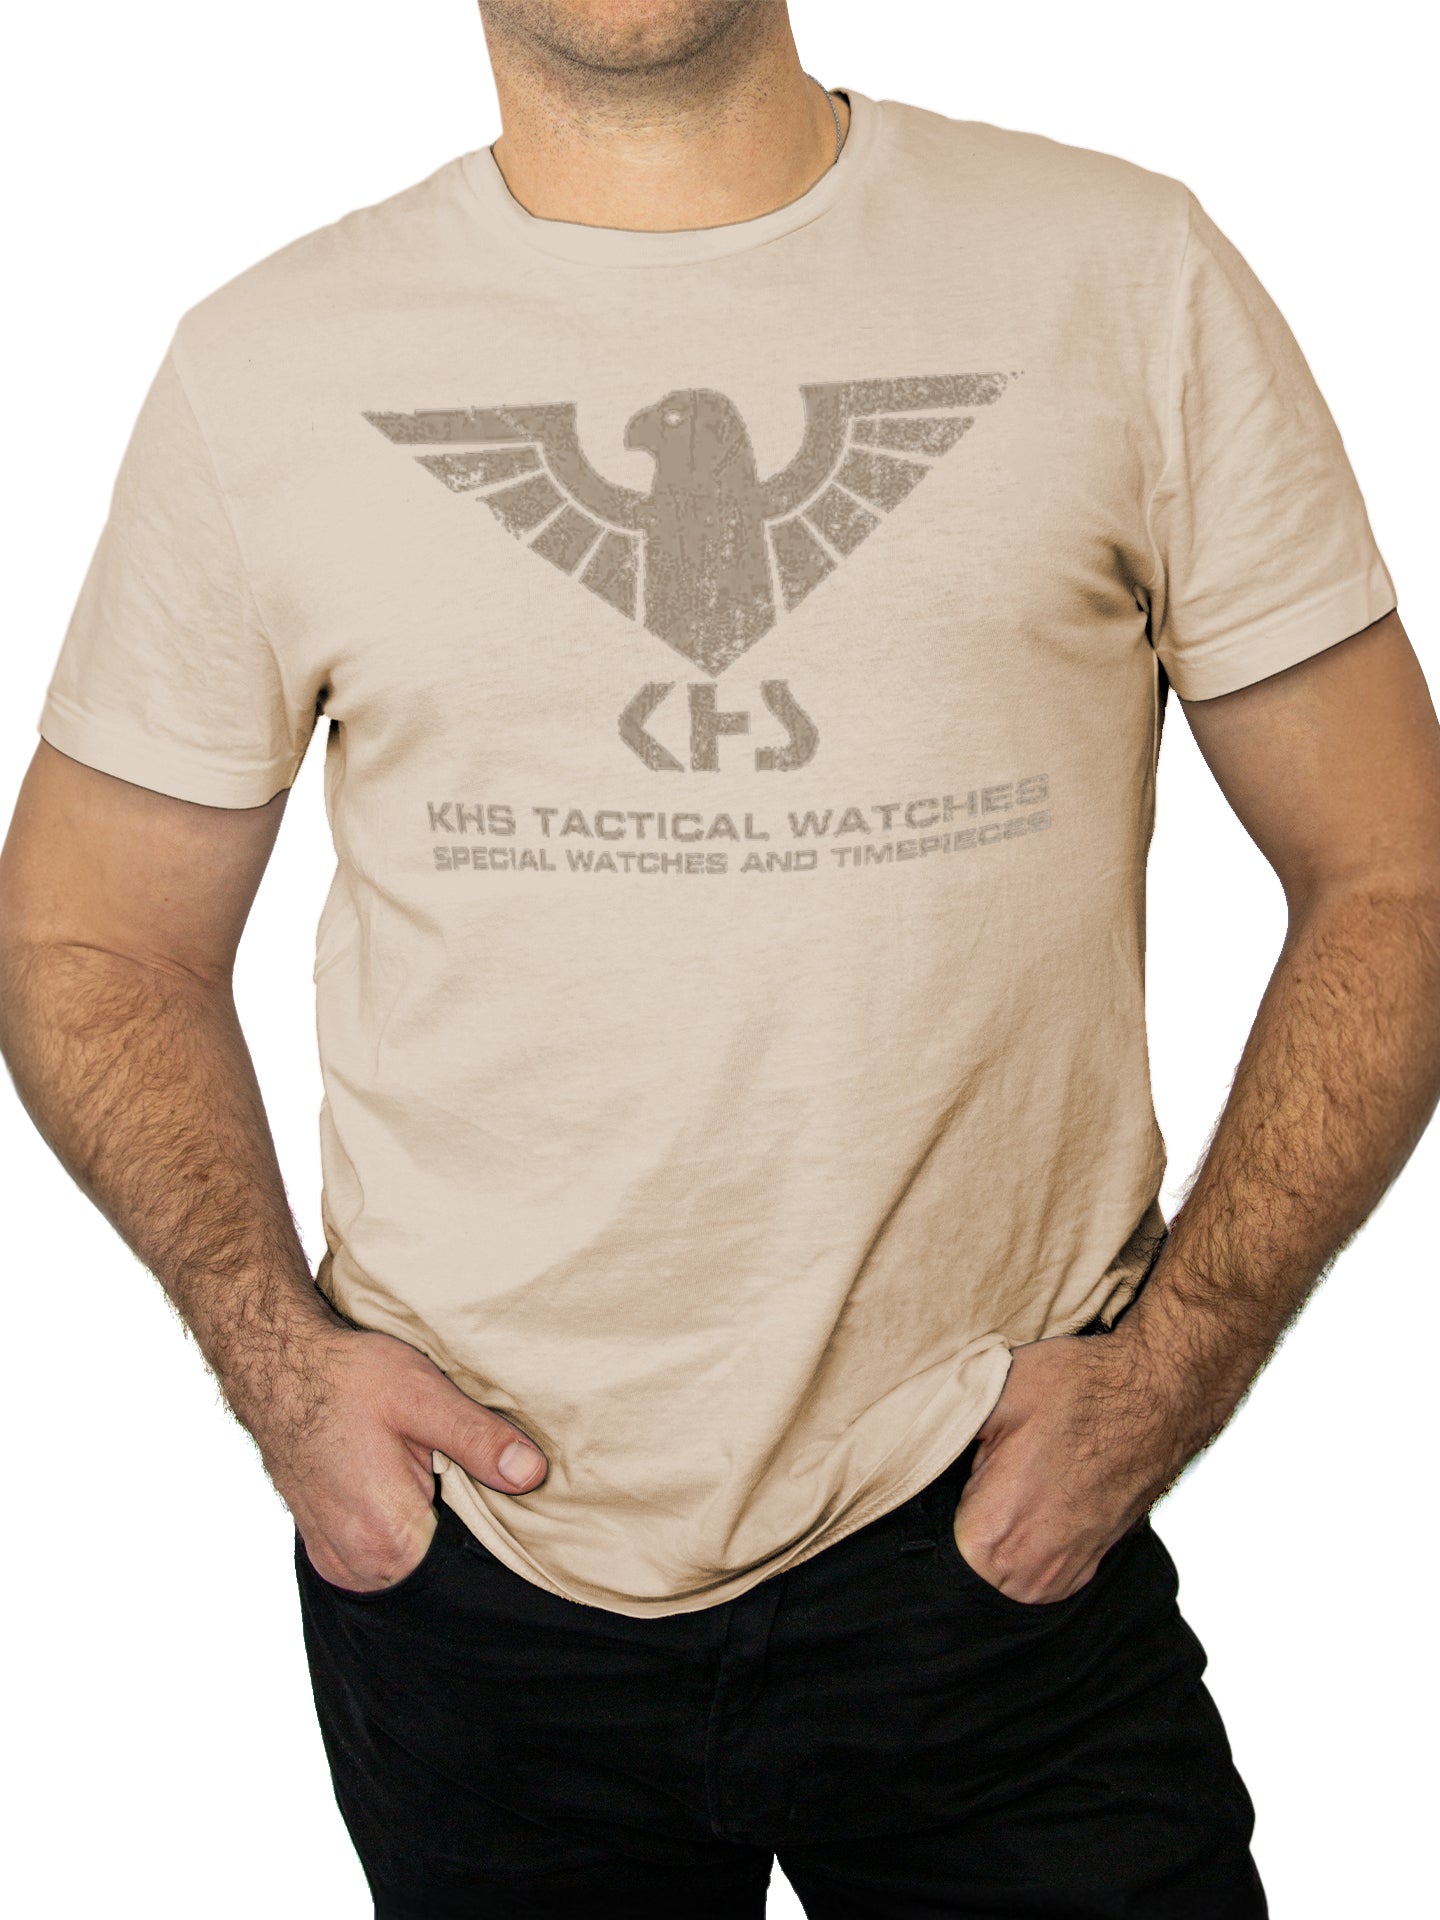 KHS T-Shirt eagle logo Tan